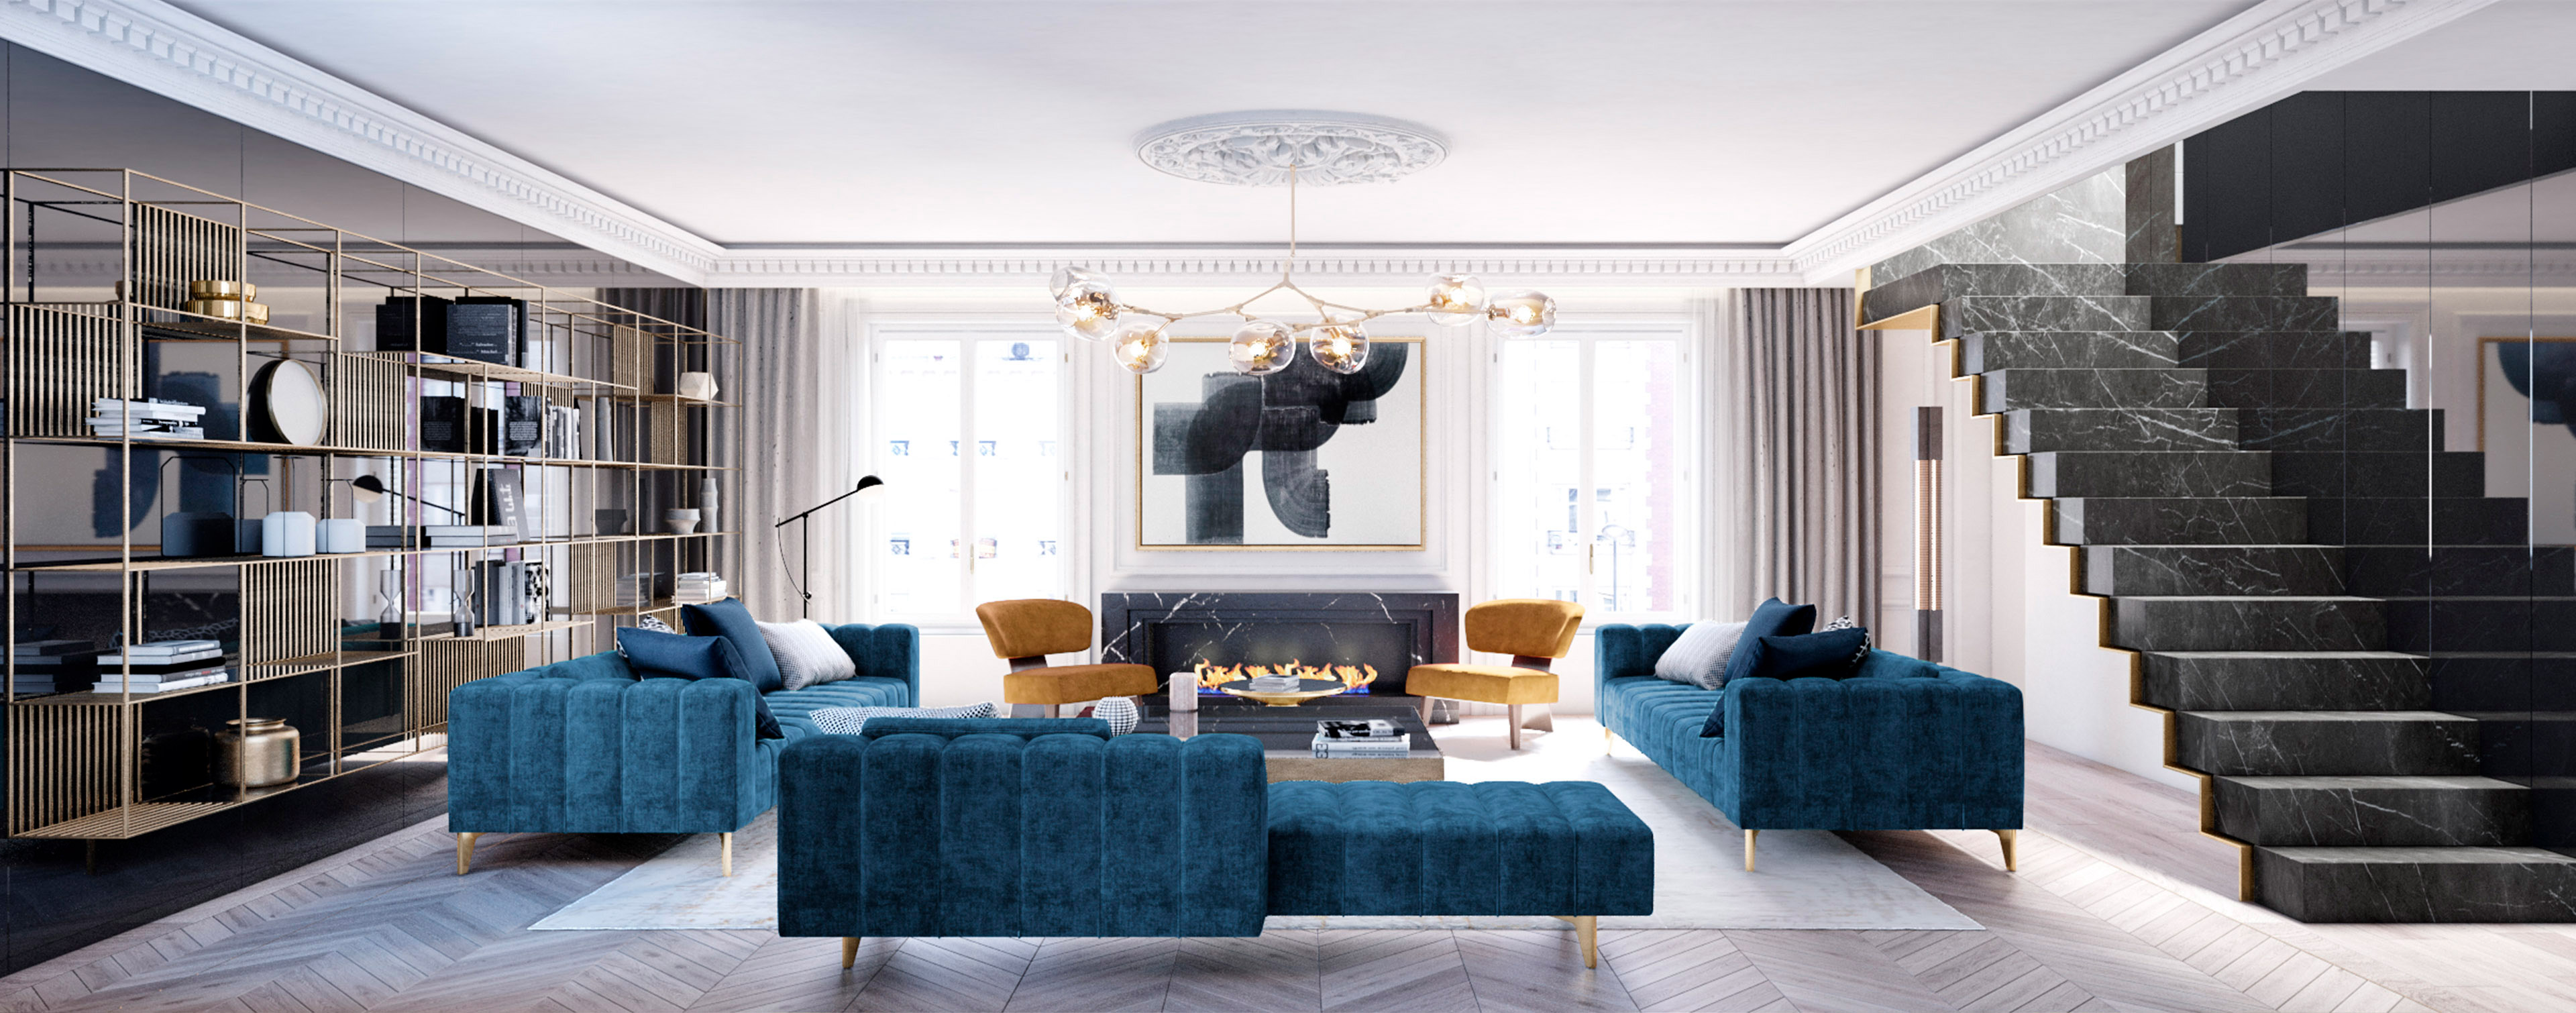 luv studio luxury architects paris saint germain penthouse apartment IMG 01 1 - SAINT GERMAIN PENTHOUSE